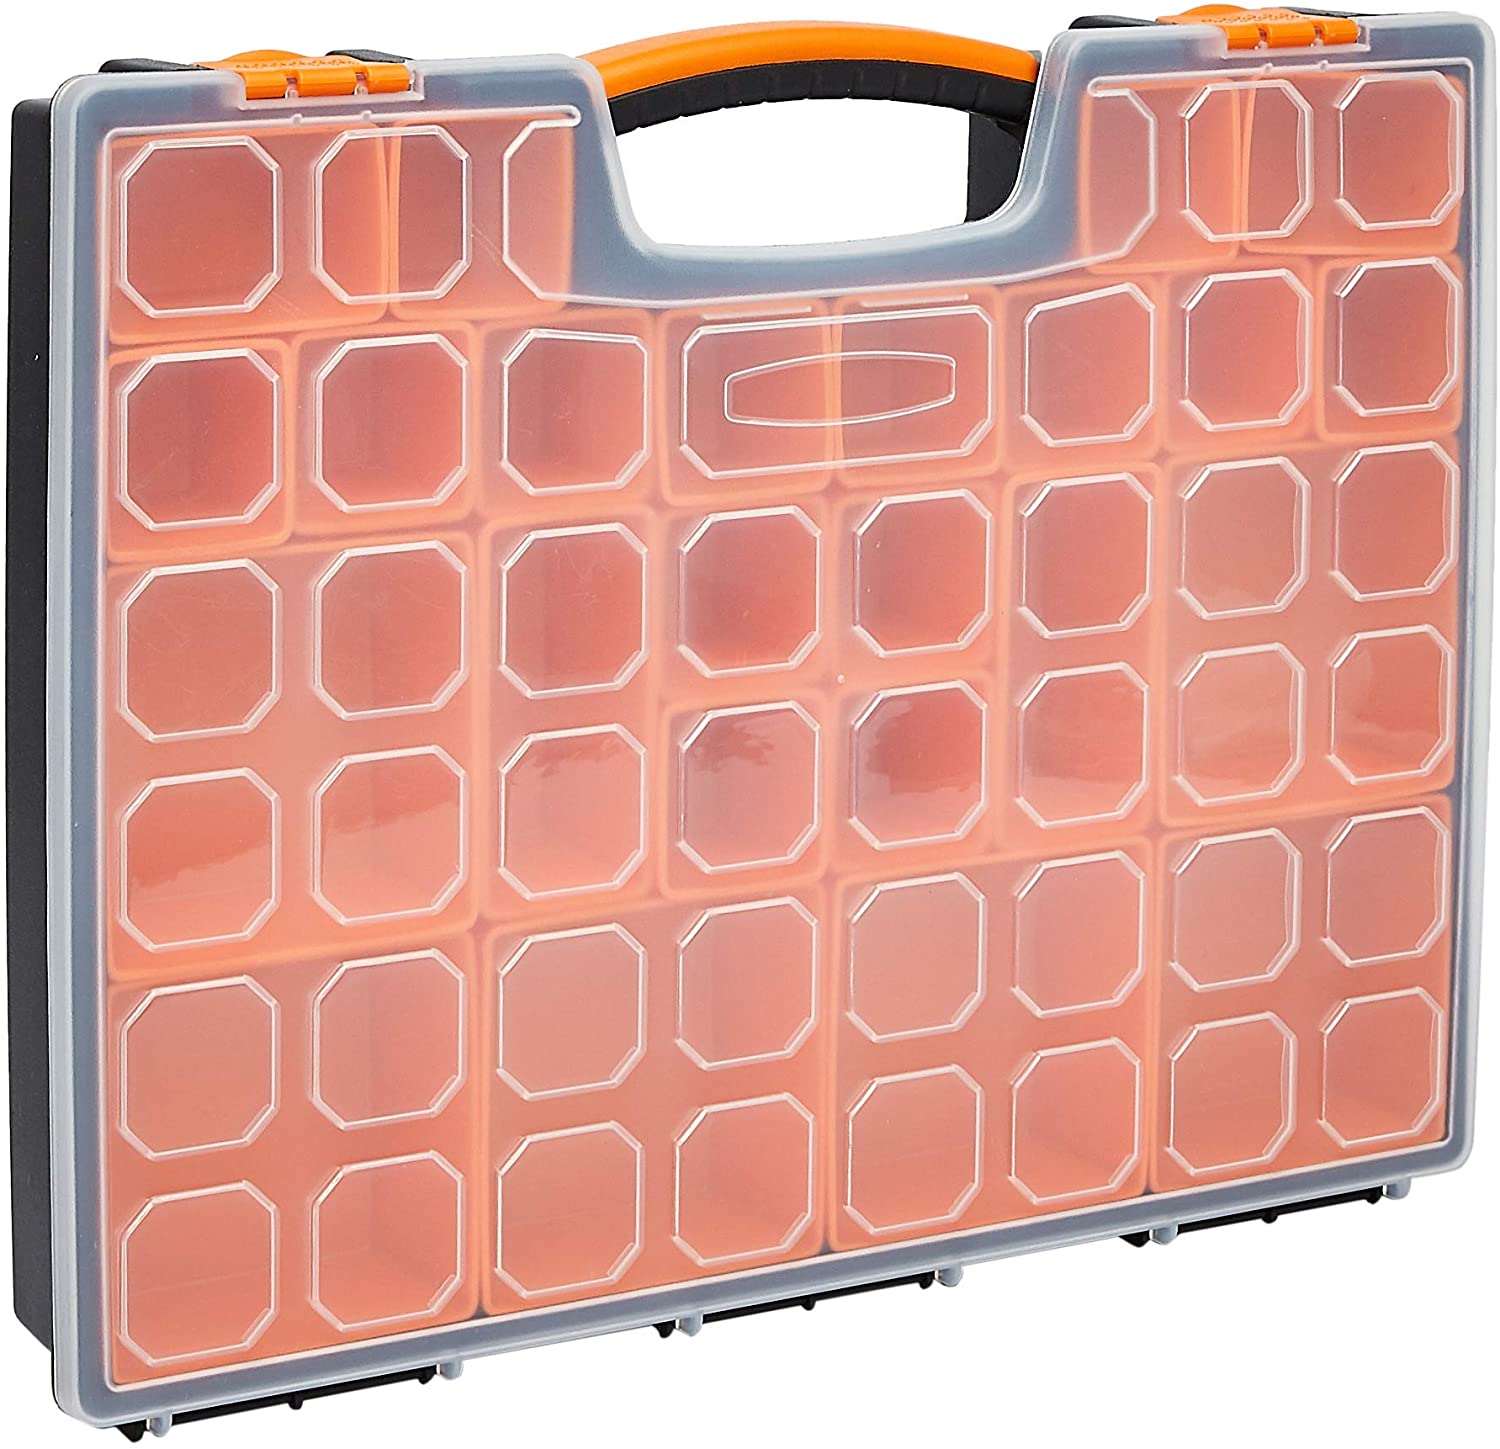 19-Removable Compartment Professional Organizer